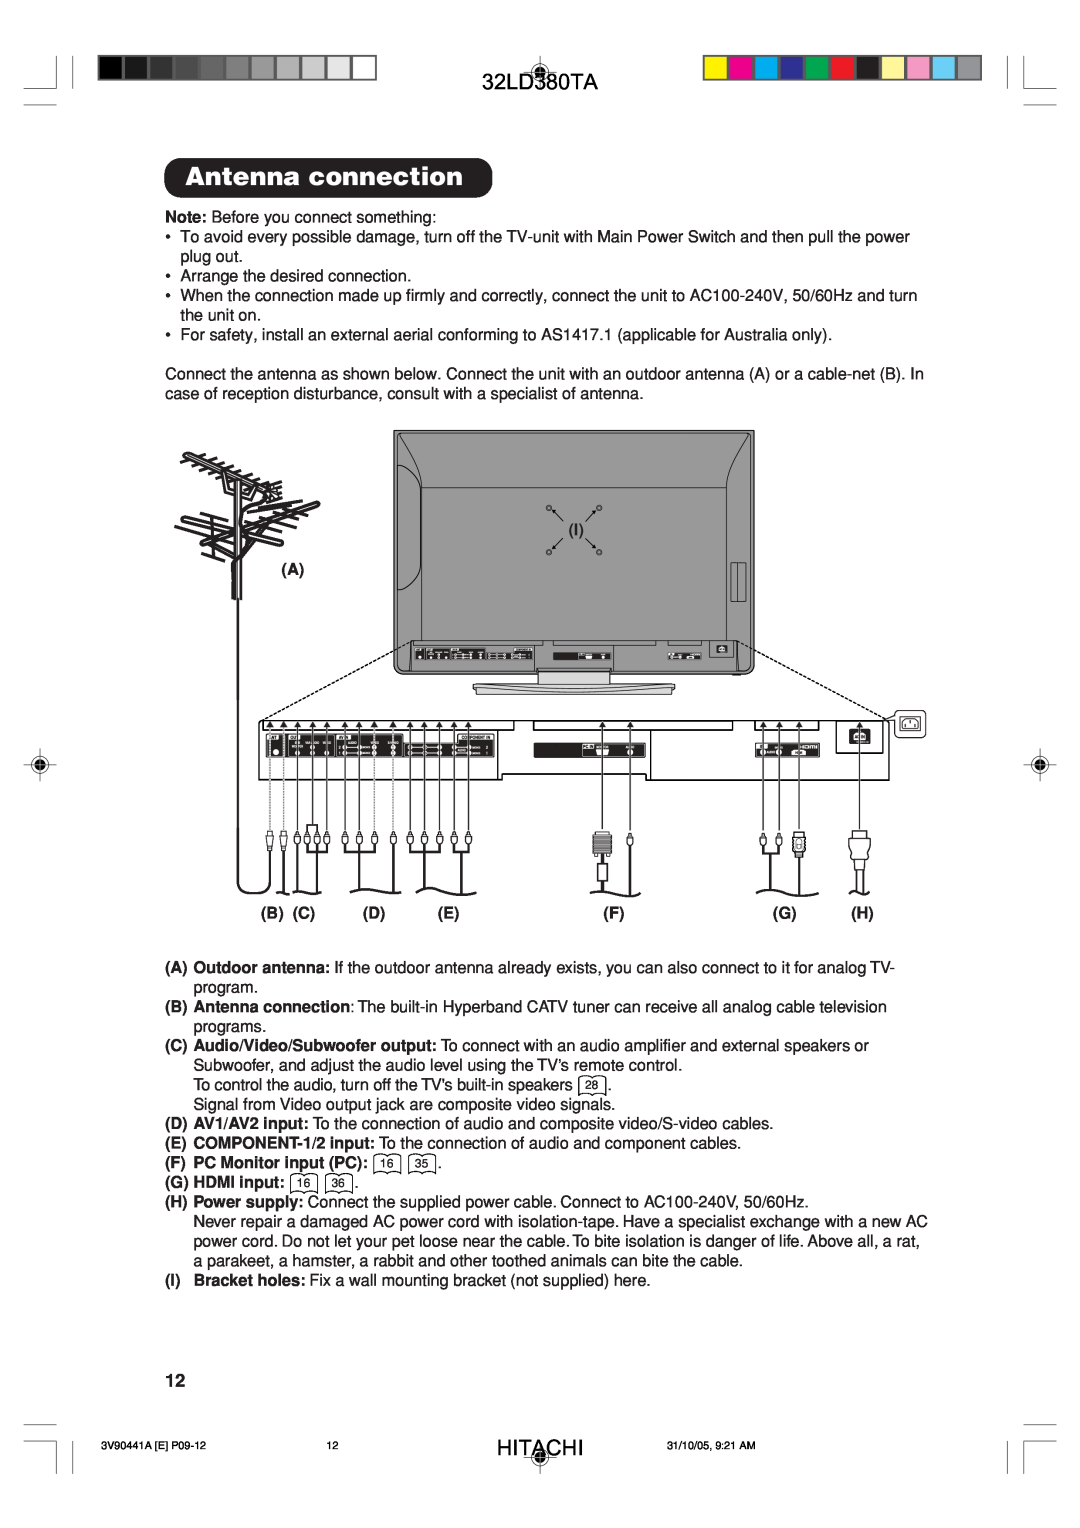 Hitachi 32LD380TA user manual Antenna connection, F PC Monitor input PC 16, G HDMI input 16, Hitachi 